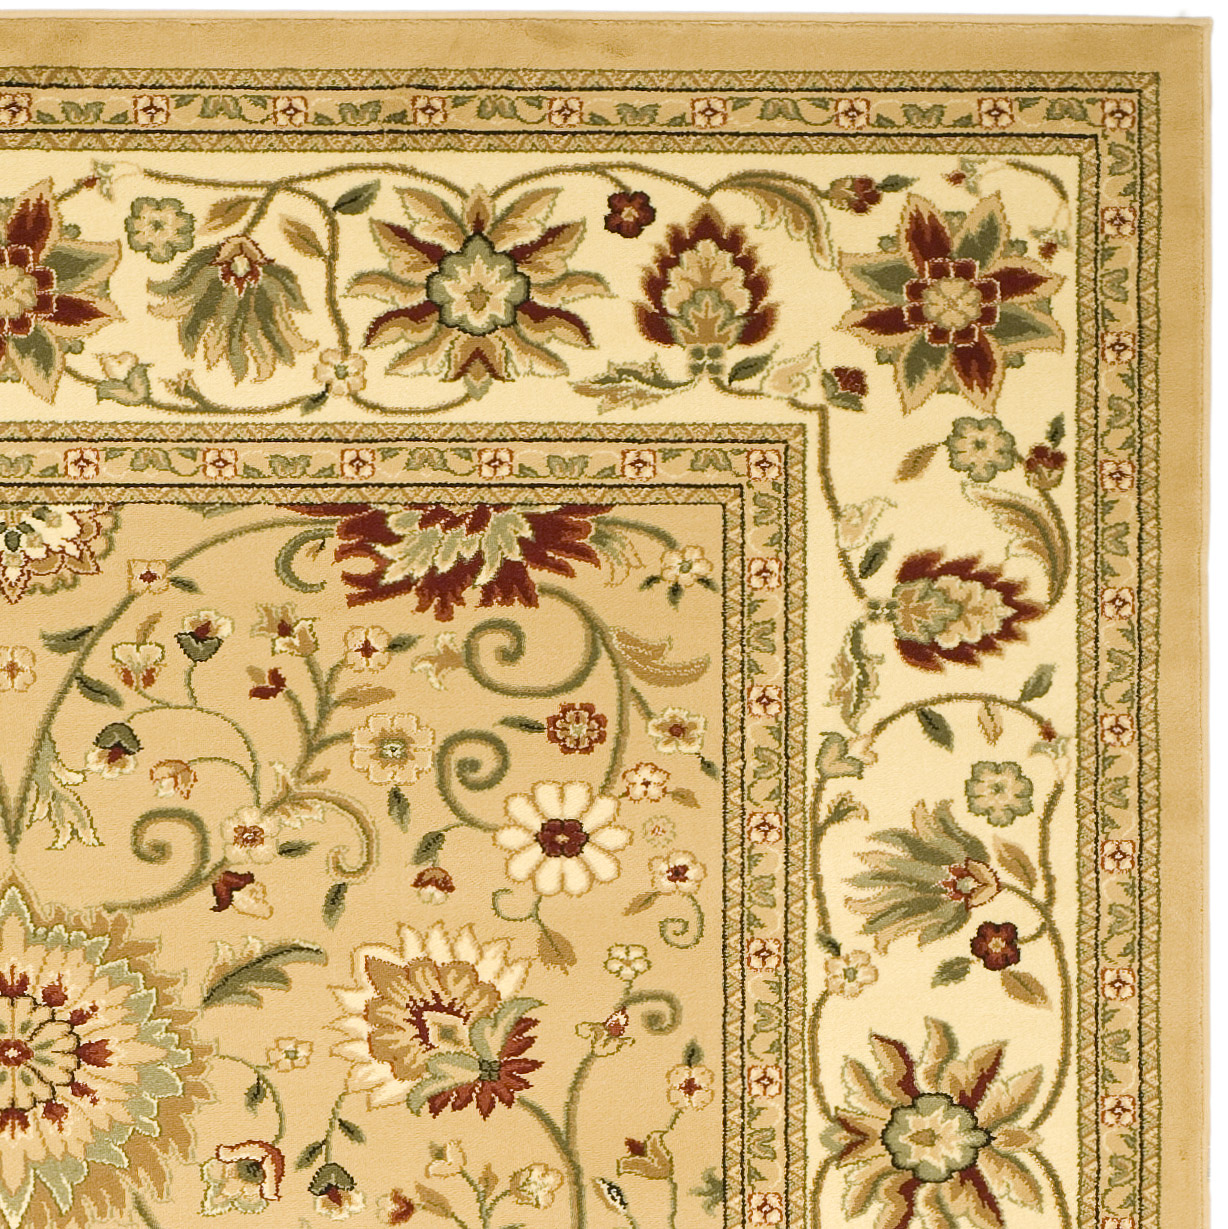 SAFAVIEH Lyndhurst Victoria Traditional Floral Runner Rug, Beige/Ivory, 2'3" x 8' - image 5 of 6